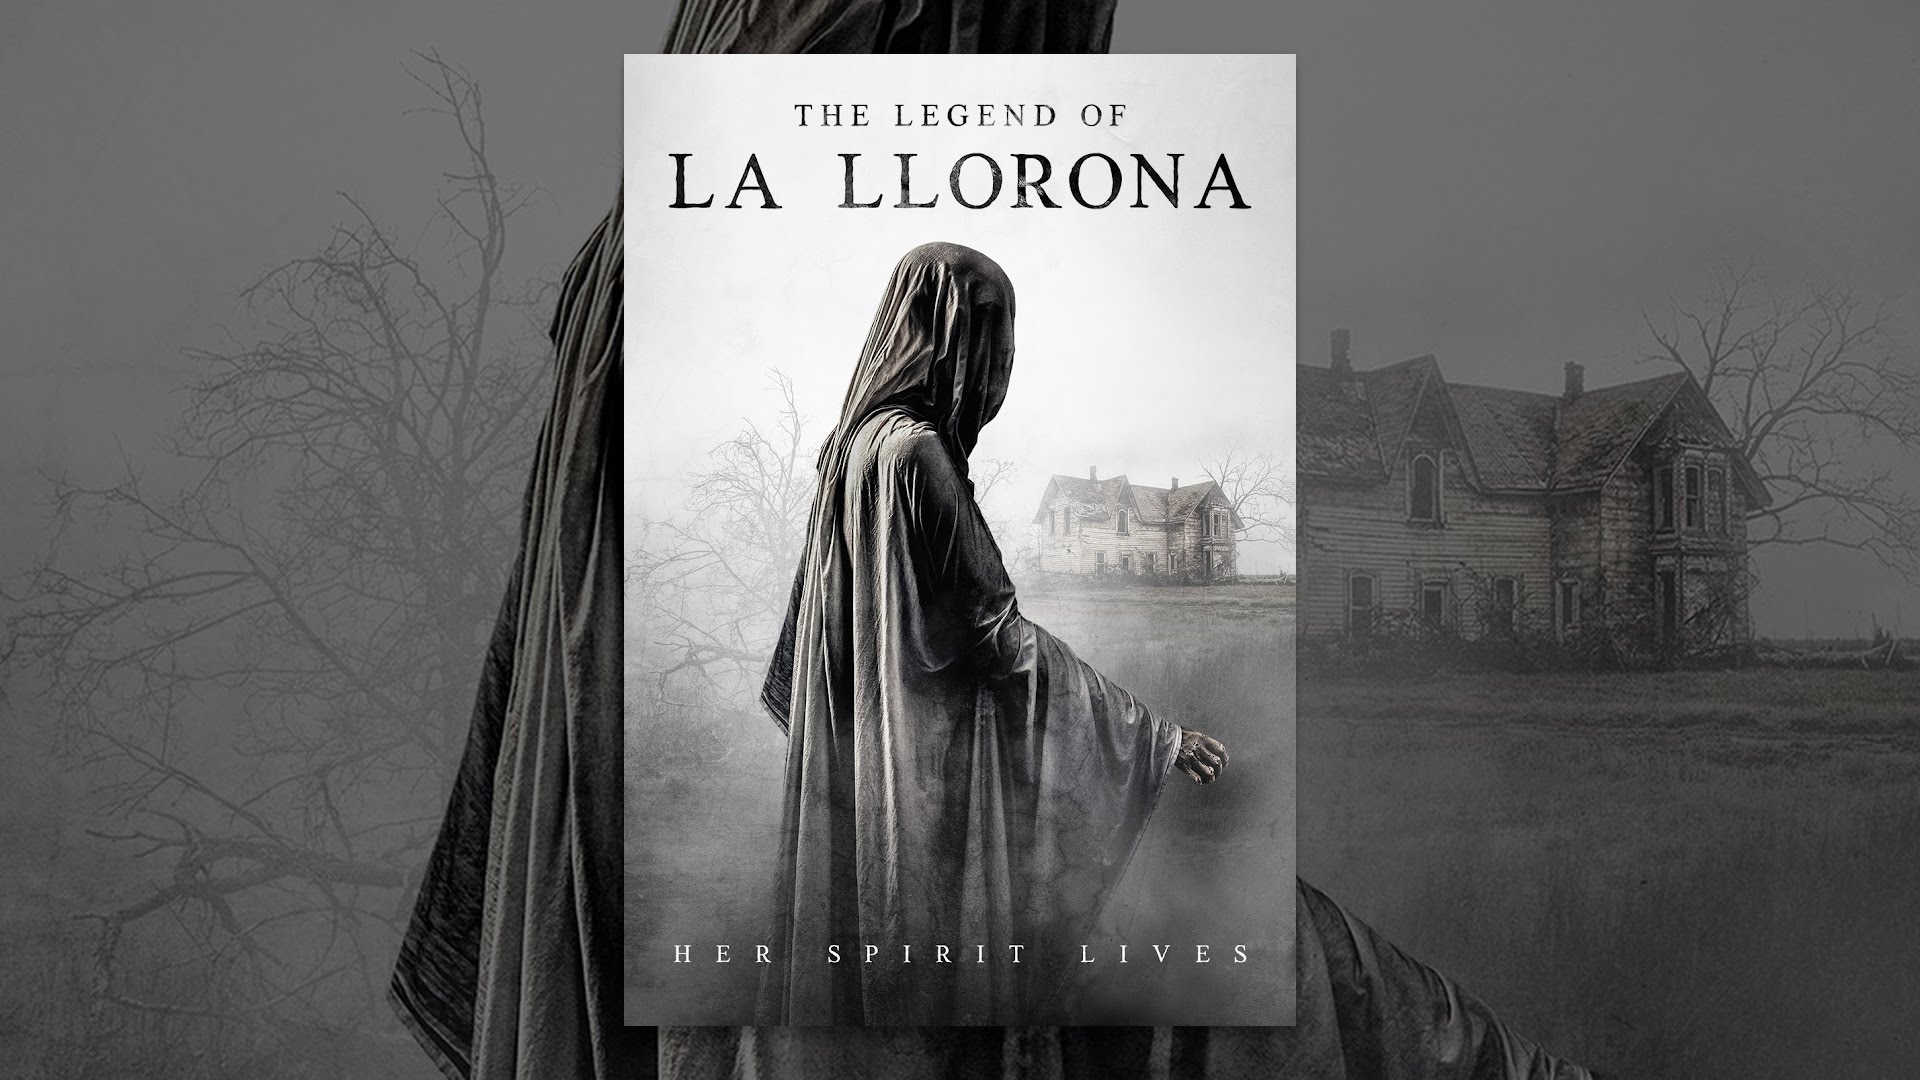 The Curse Of La Llorona Movie 4K Wallpapers